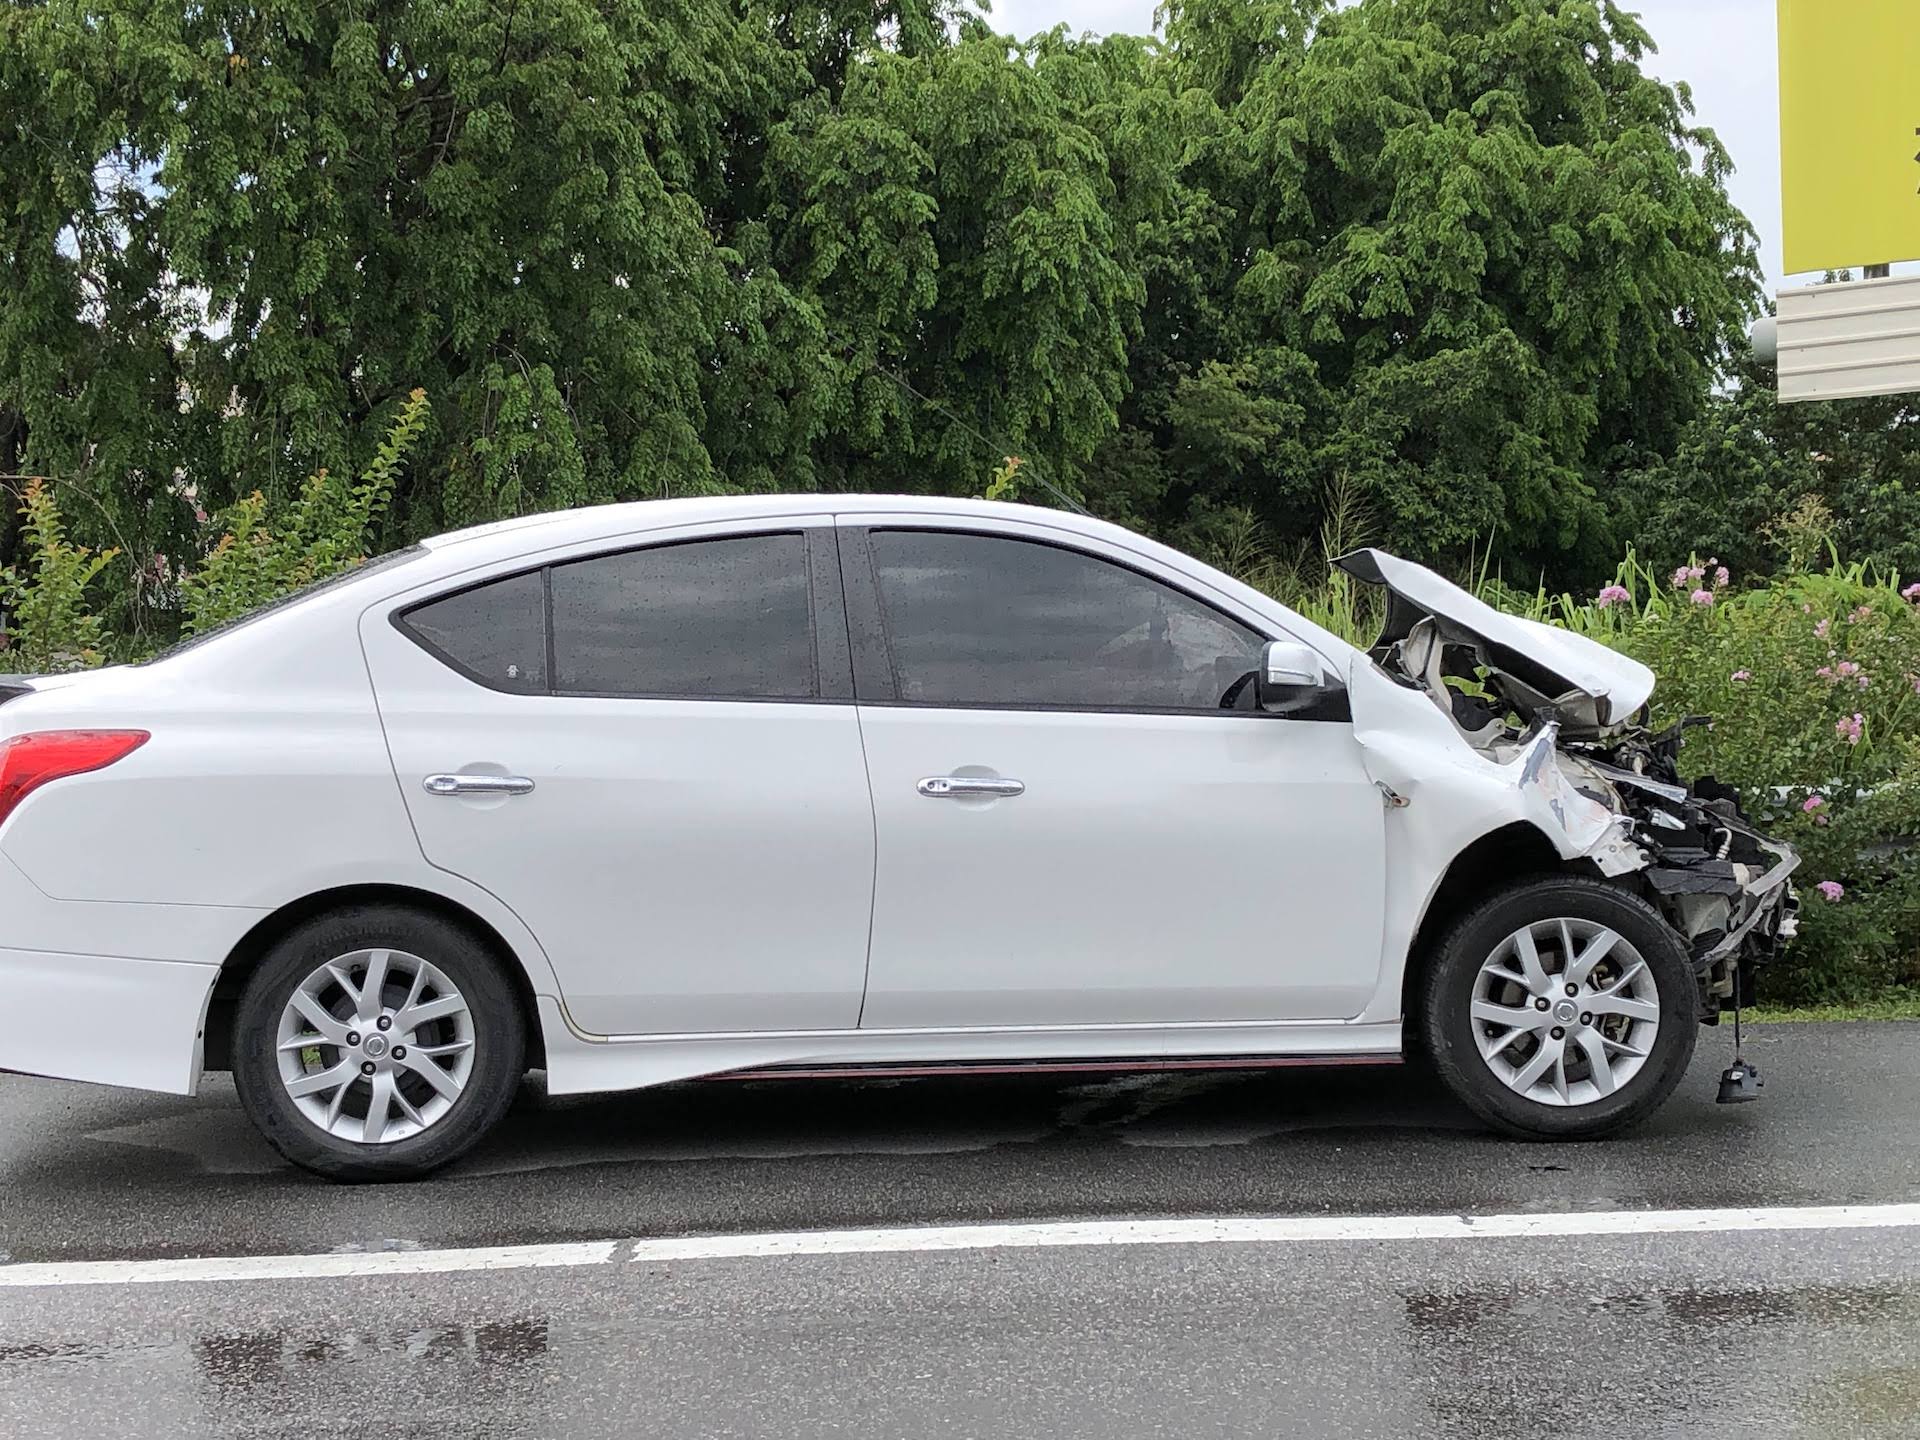 Nissan Almera accident